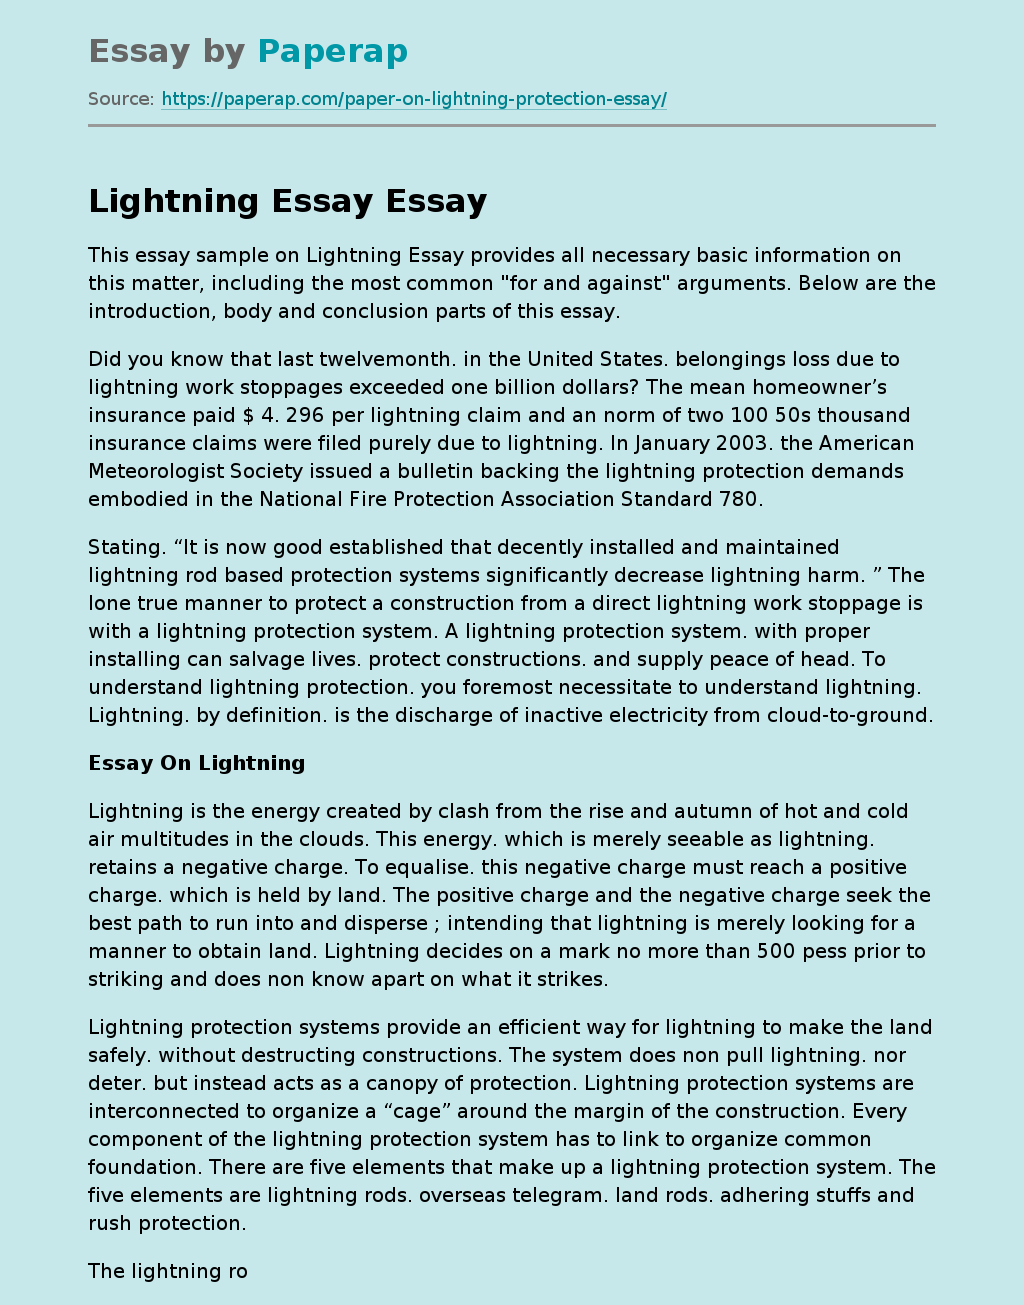 Lightning Is Energy When It Ignites